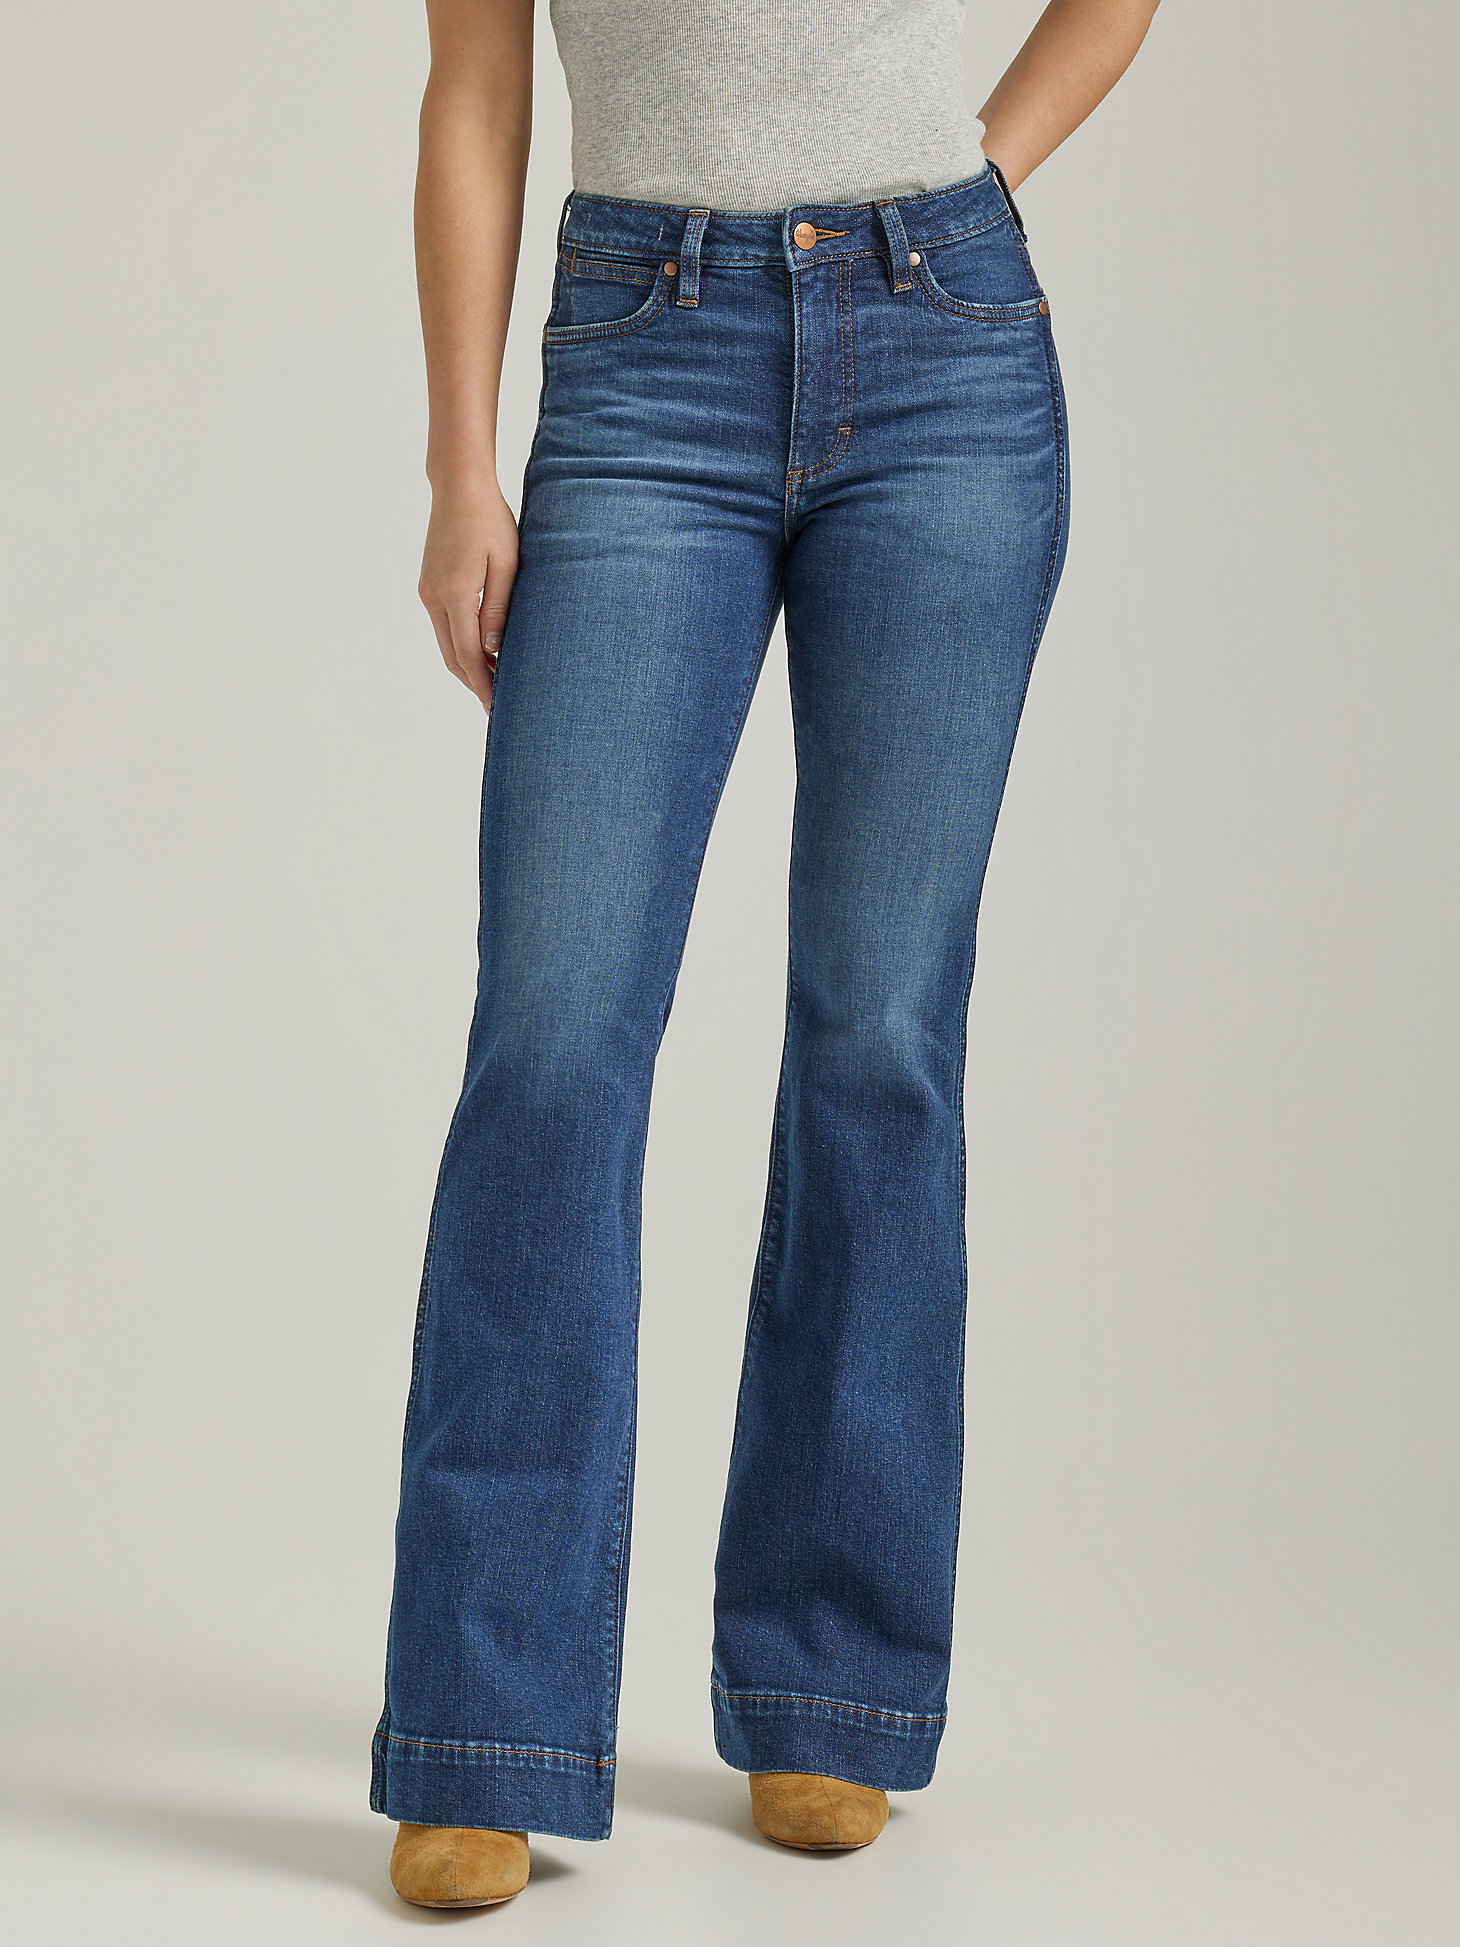 Women's Wrangler Retro® Premium High Rise Trouser Jean in Gabriella alternative view 1